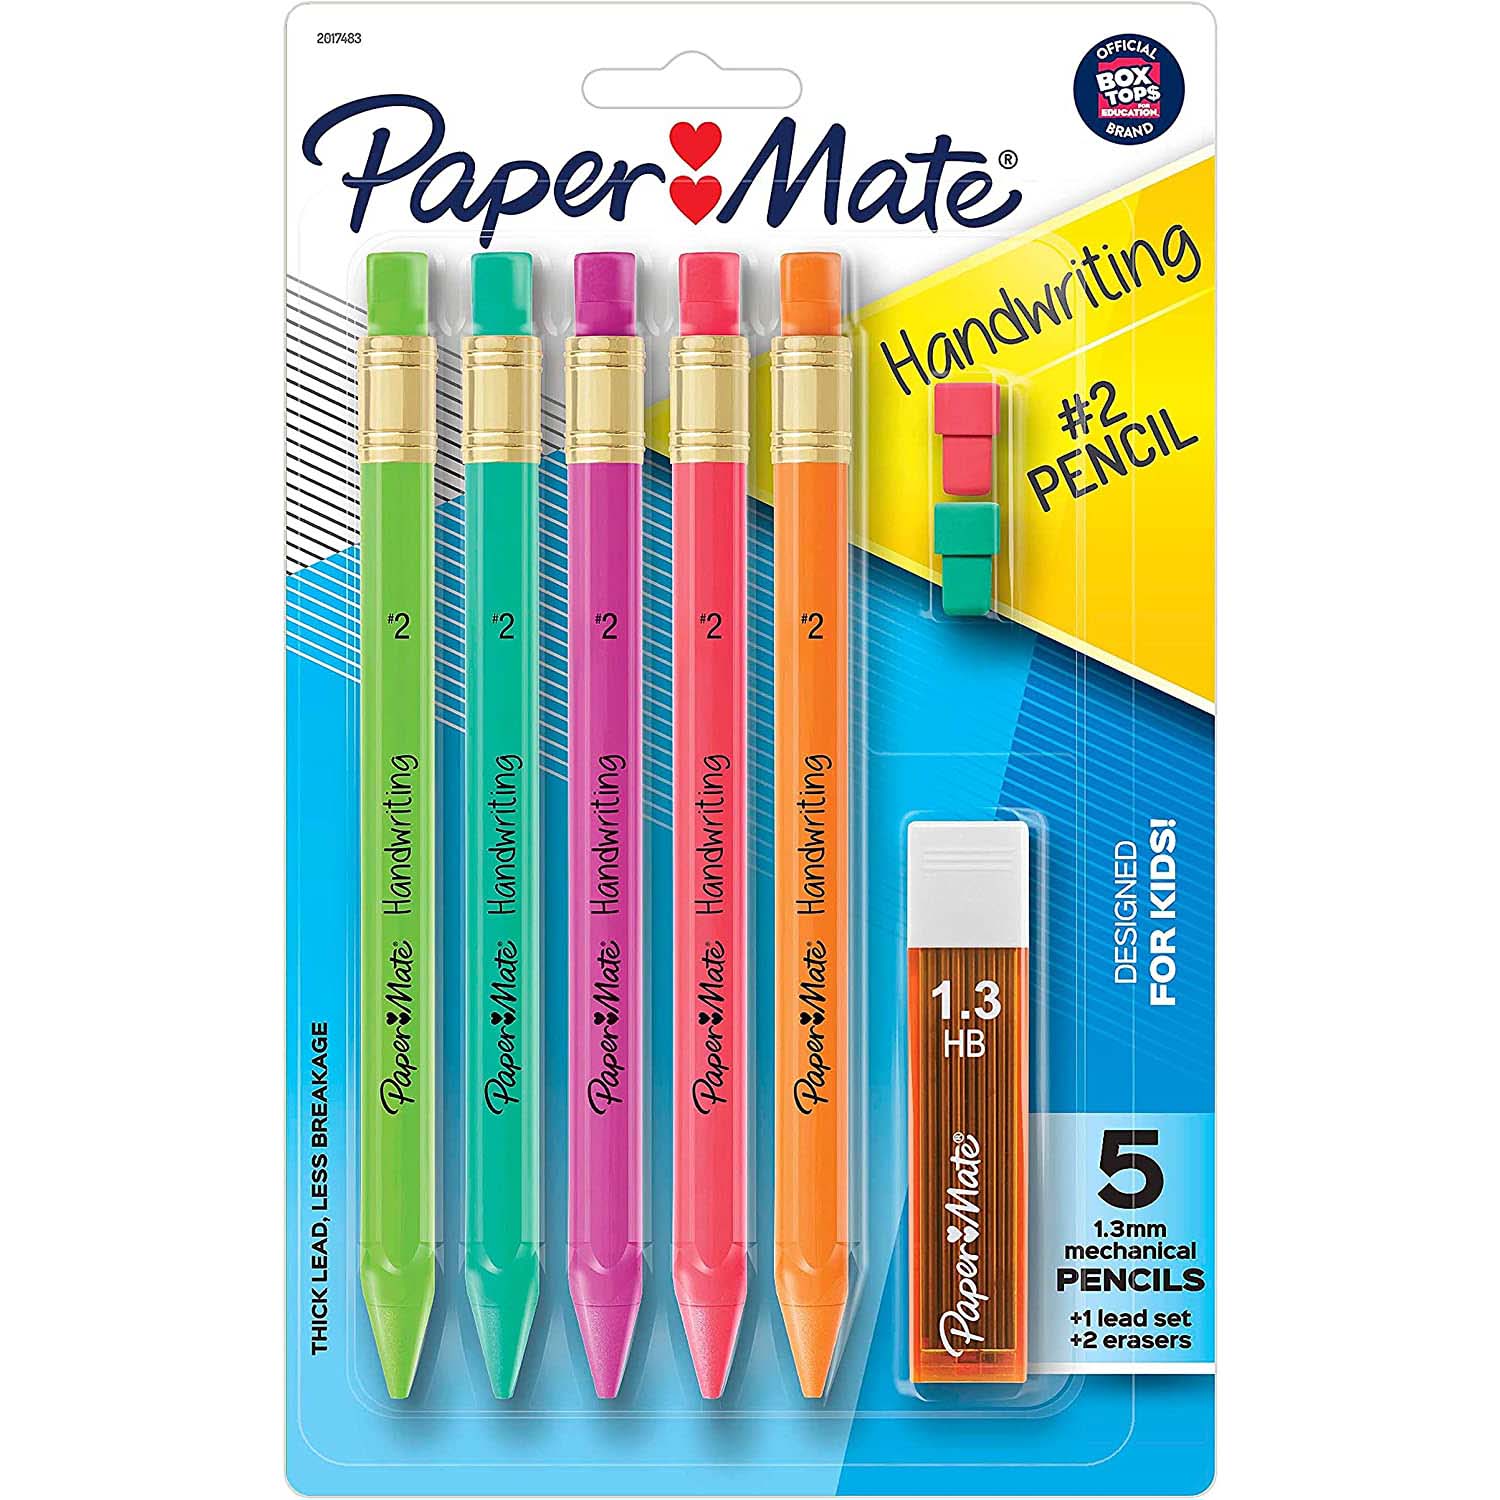 PAPER MATE Handwriting Triangular Mechanical Pencil Set with Lead & Eraser Refills, 1.3mm, Fun Barrel Colors, 8 Count, Black